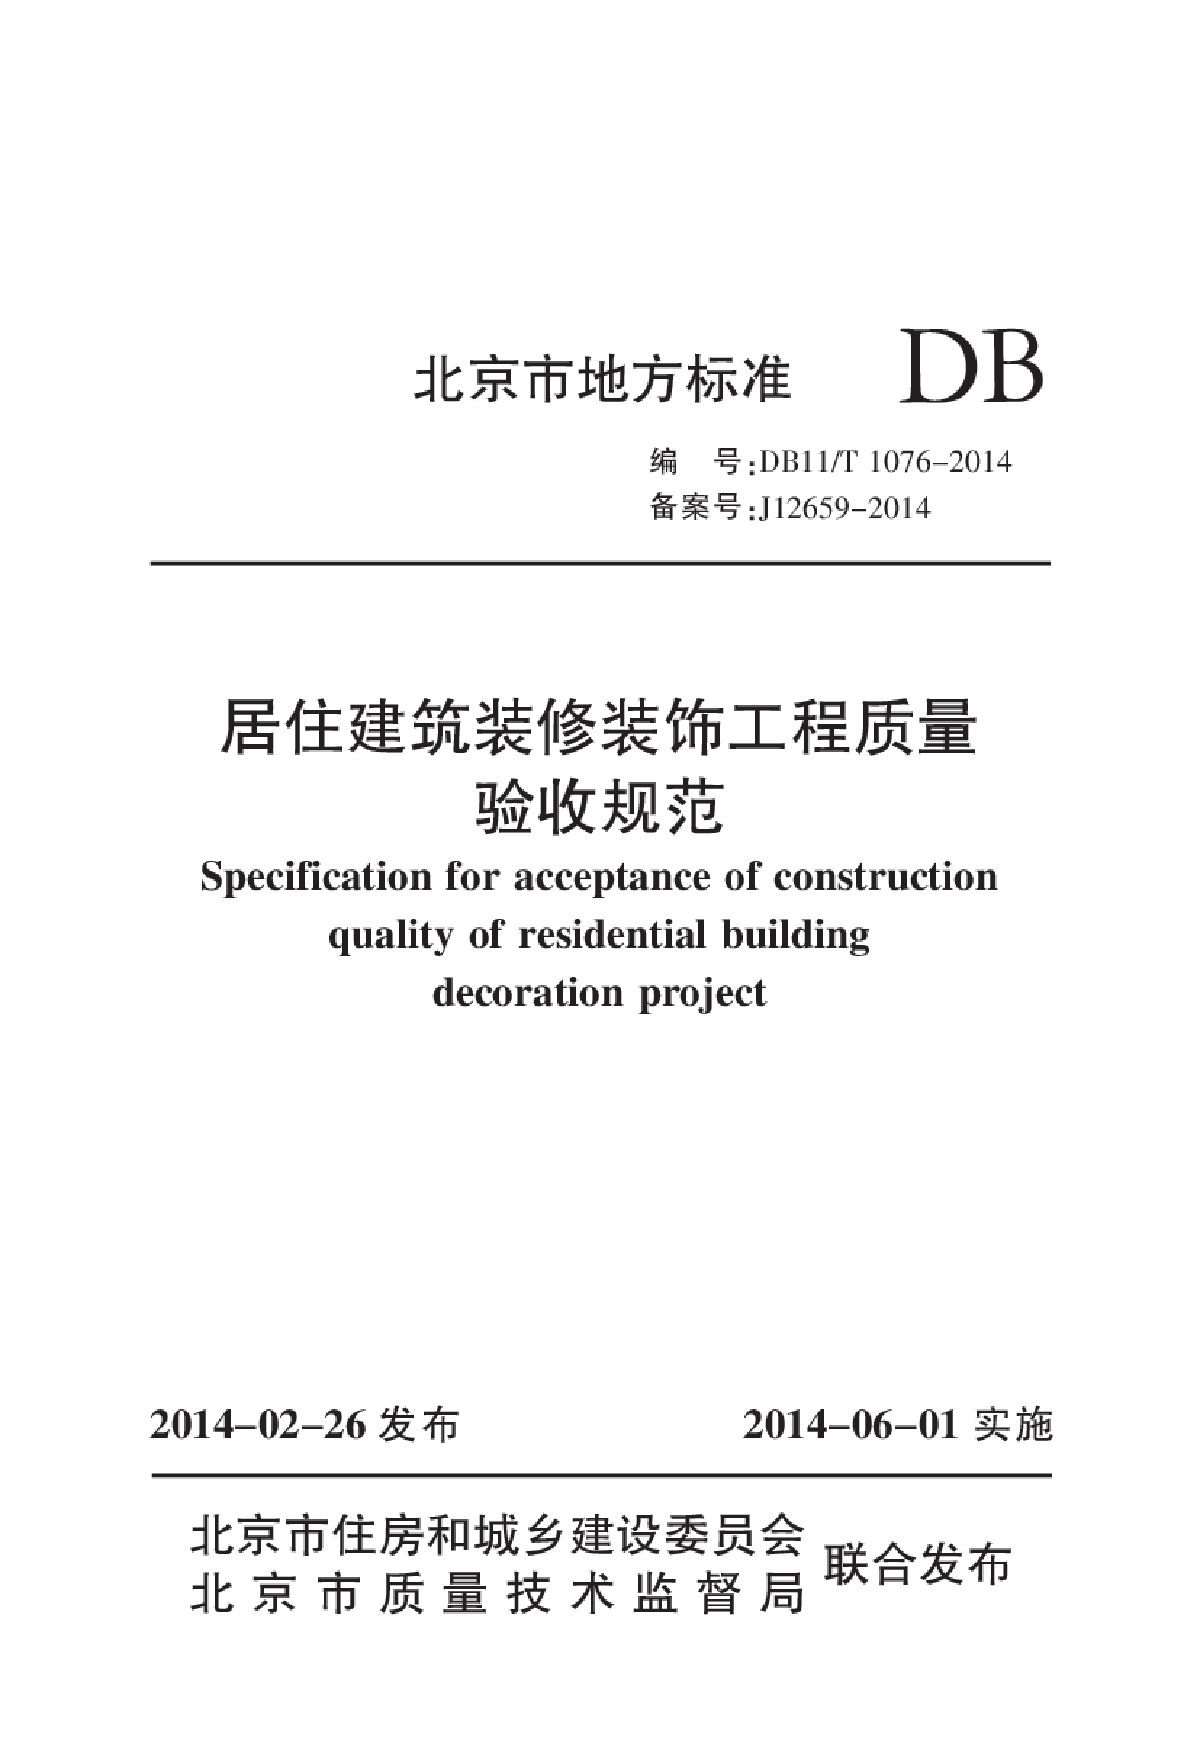 DB11/T 1076-2014居住建筑装修装饰工程质量验收规范